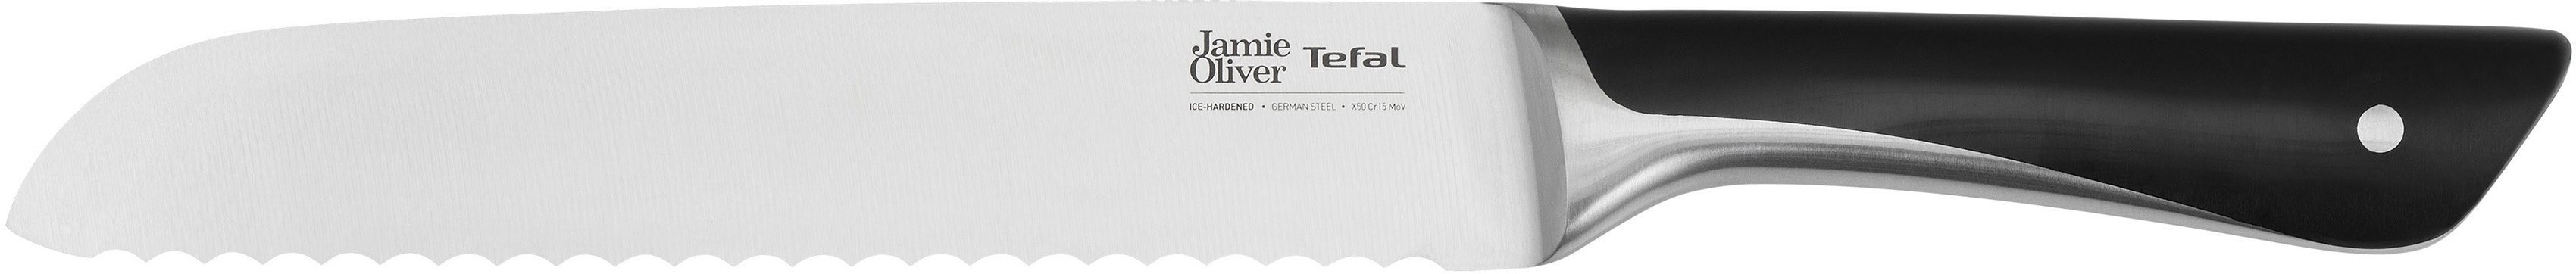 【Fachgeschäft】 Tefal Brotmesser Jamie Oliver unverwechselbares Leistung, widerstandsfähig/langlebig Design, K26703, hohe